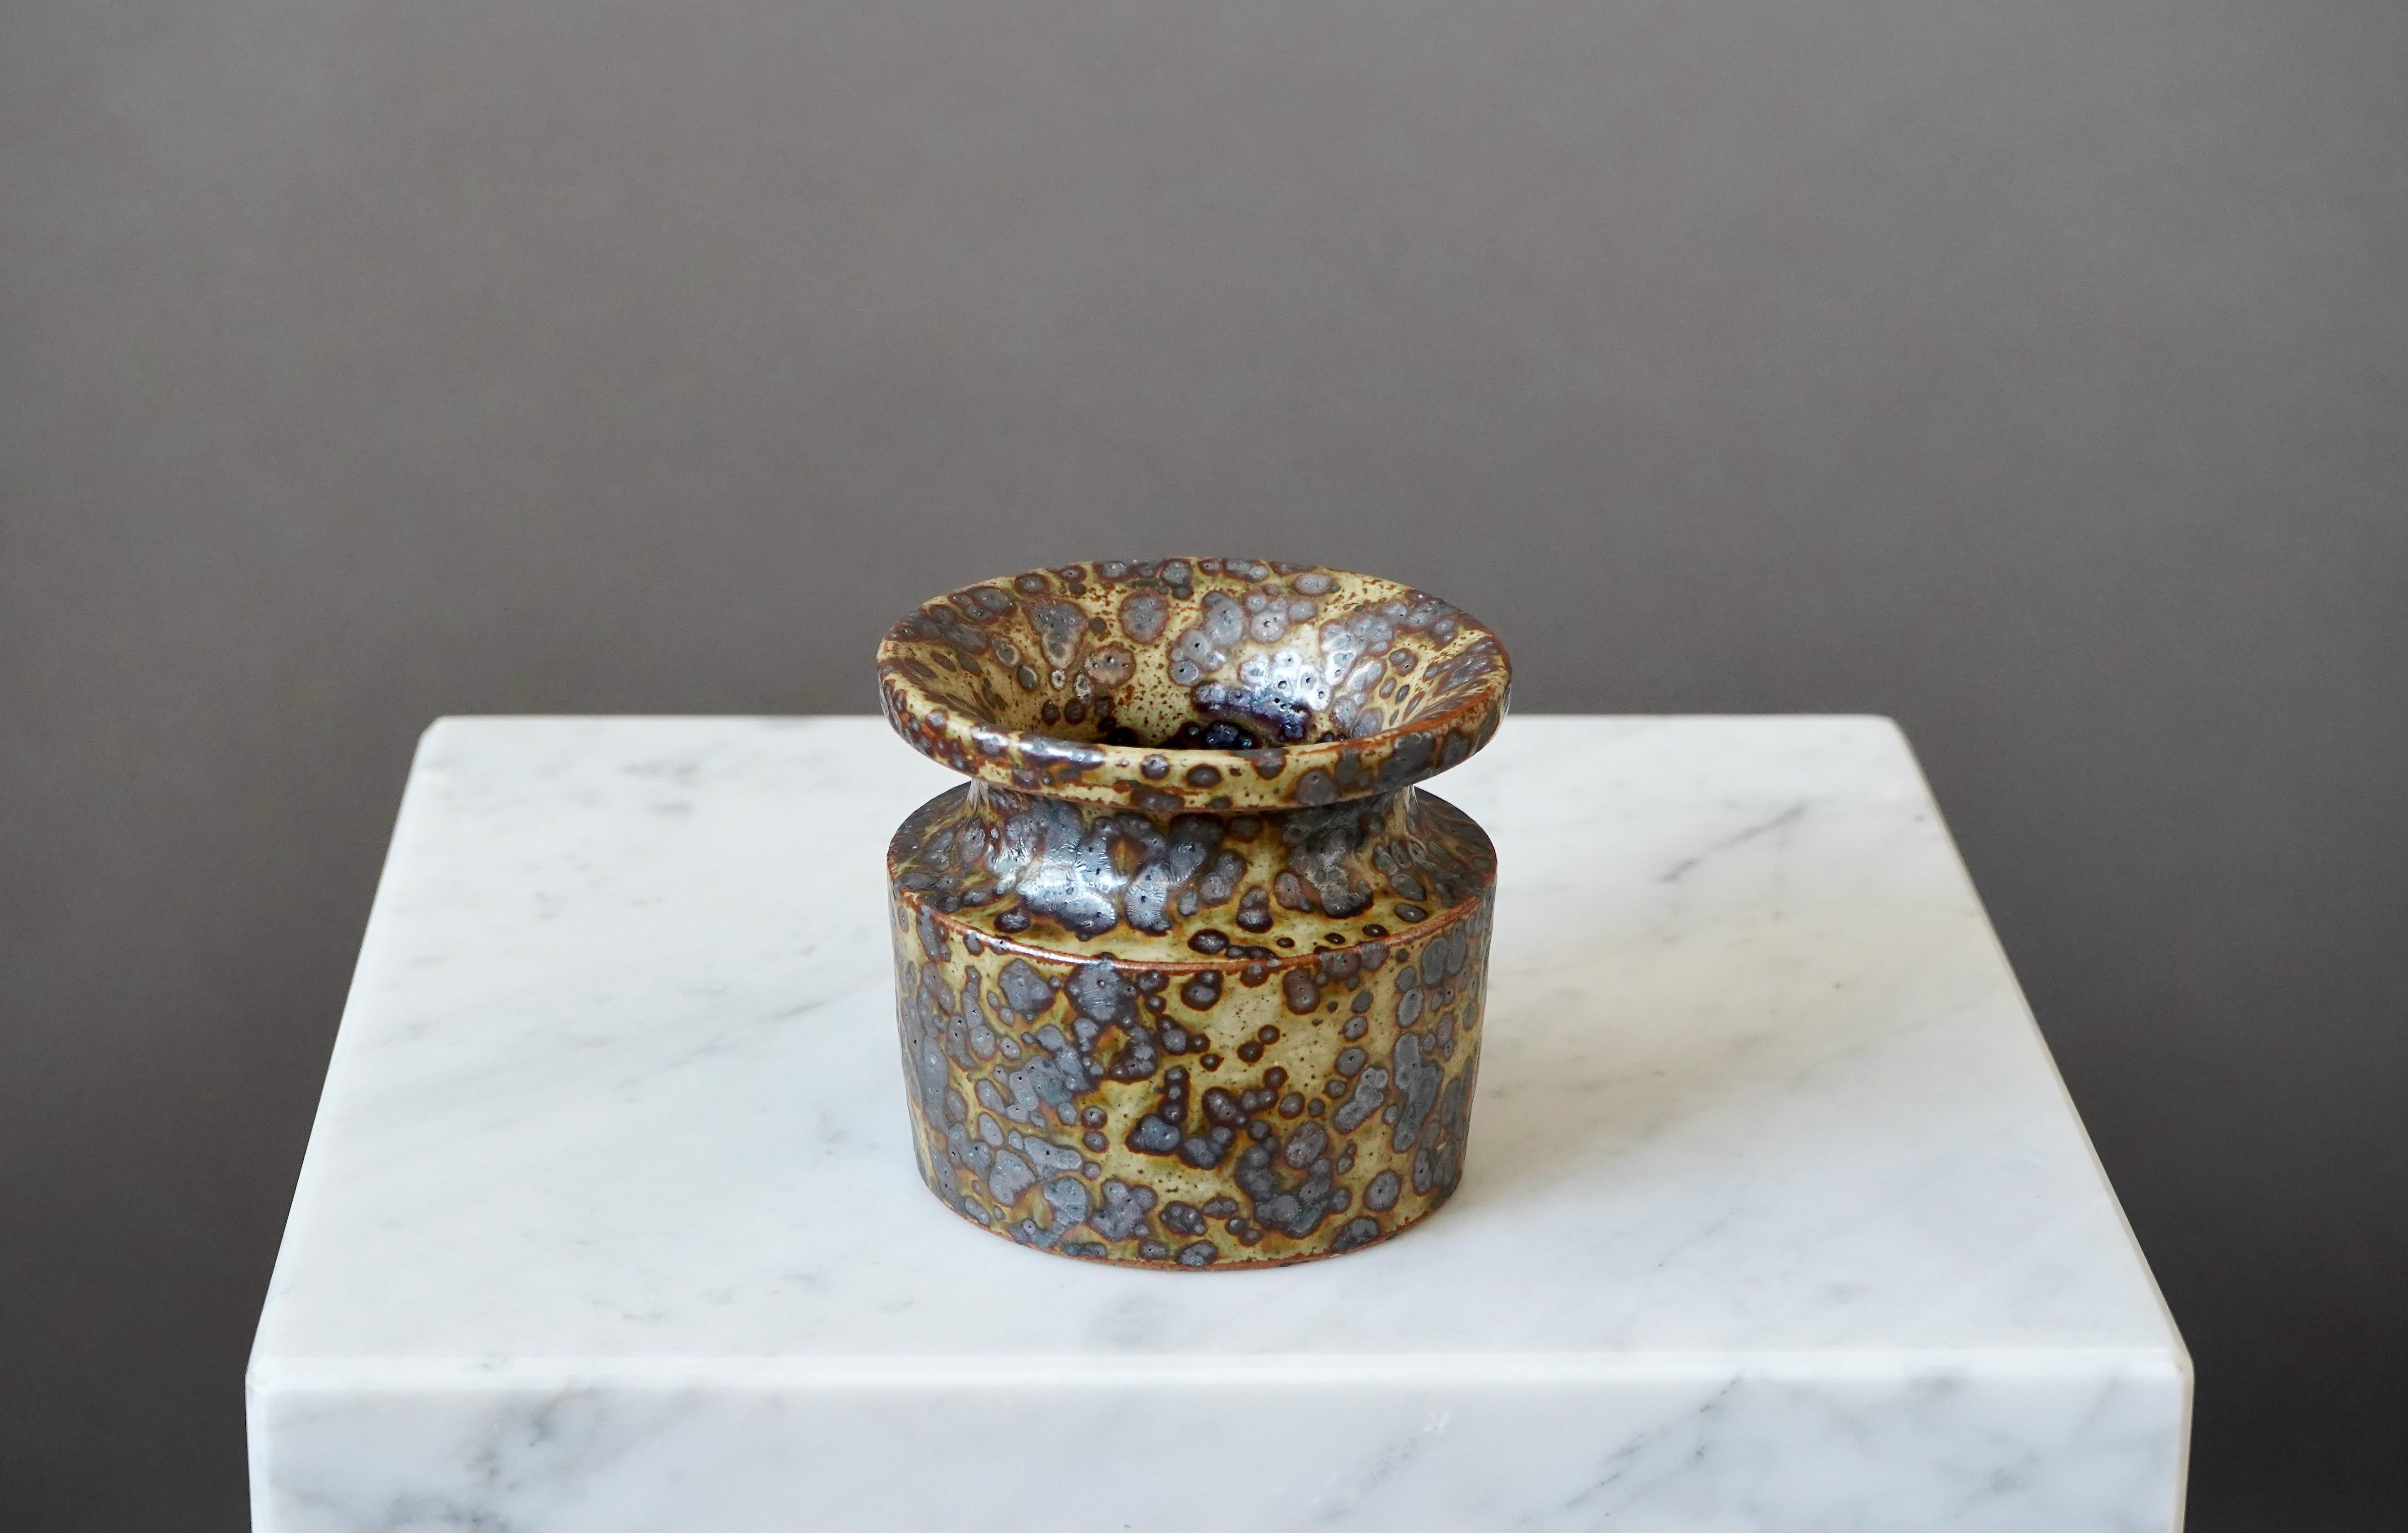 Scandinavian Modern Stoneware Vase by Swedish Ceramist Claes Thell